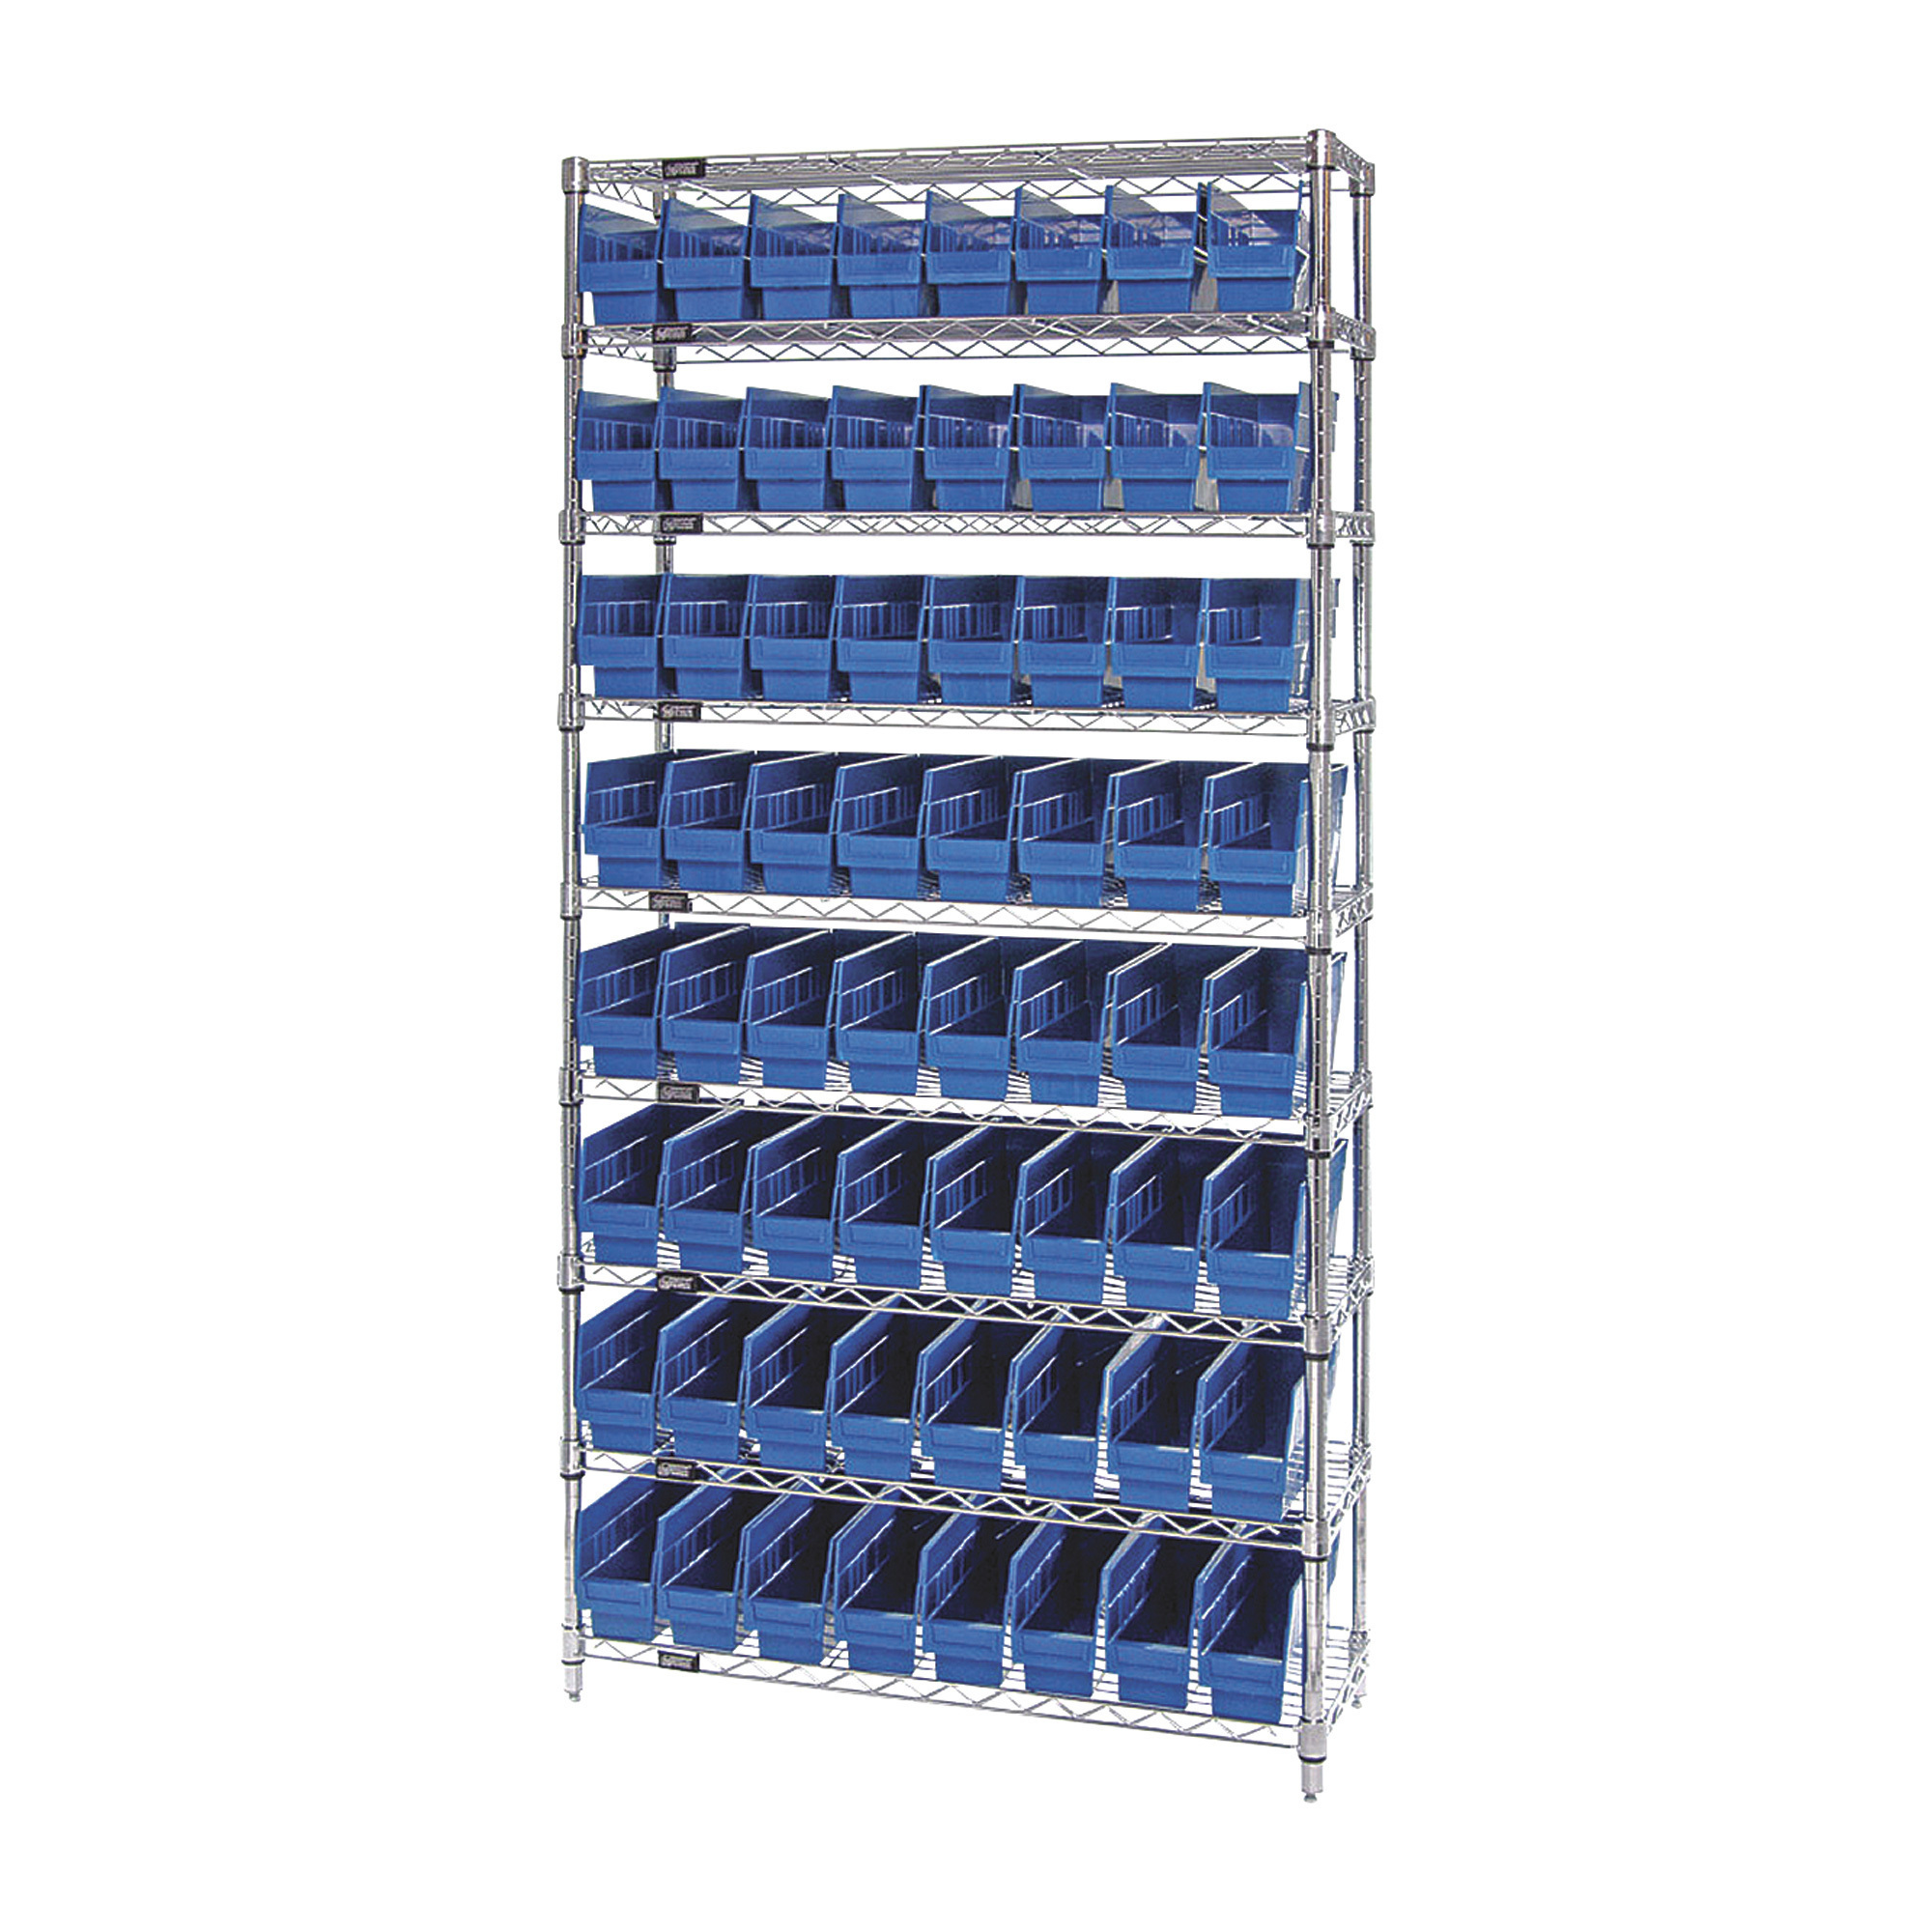 Quantum Storage Single Side Wire Chrome Shelving Unit with 64 Bins — 36Inch W x 12Inch D x 74Inch H, Blue, Model WR9-201BL -  Quantum Storage Systems